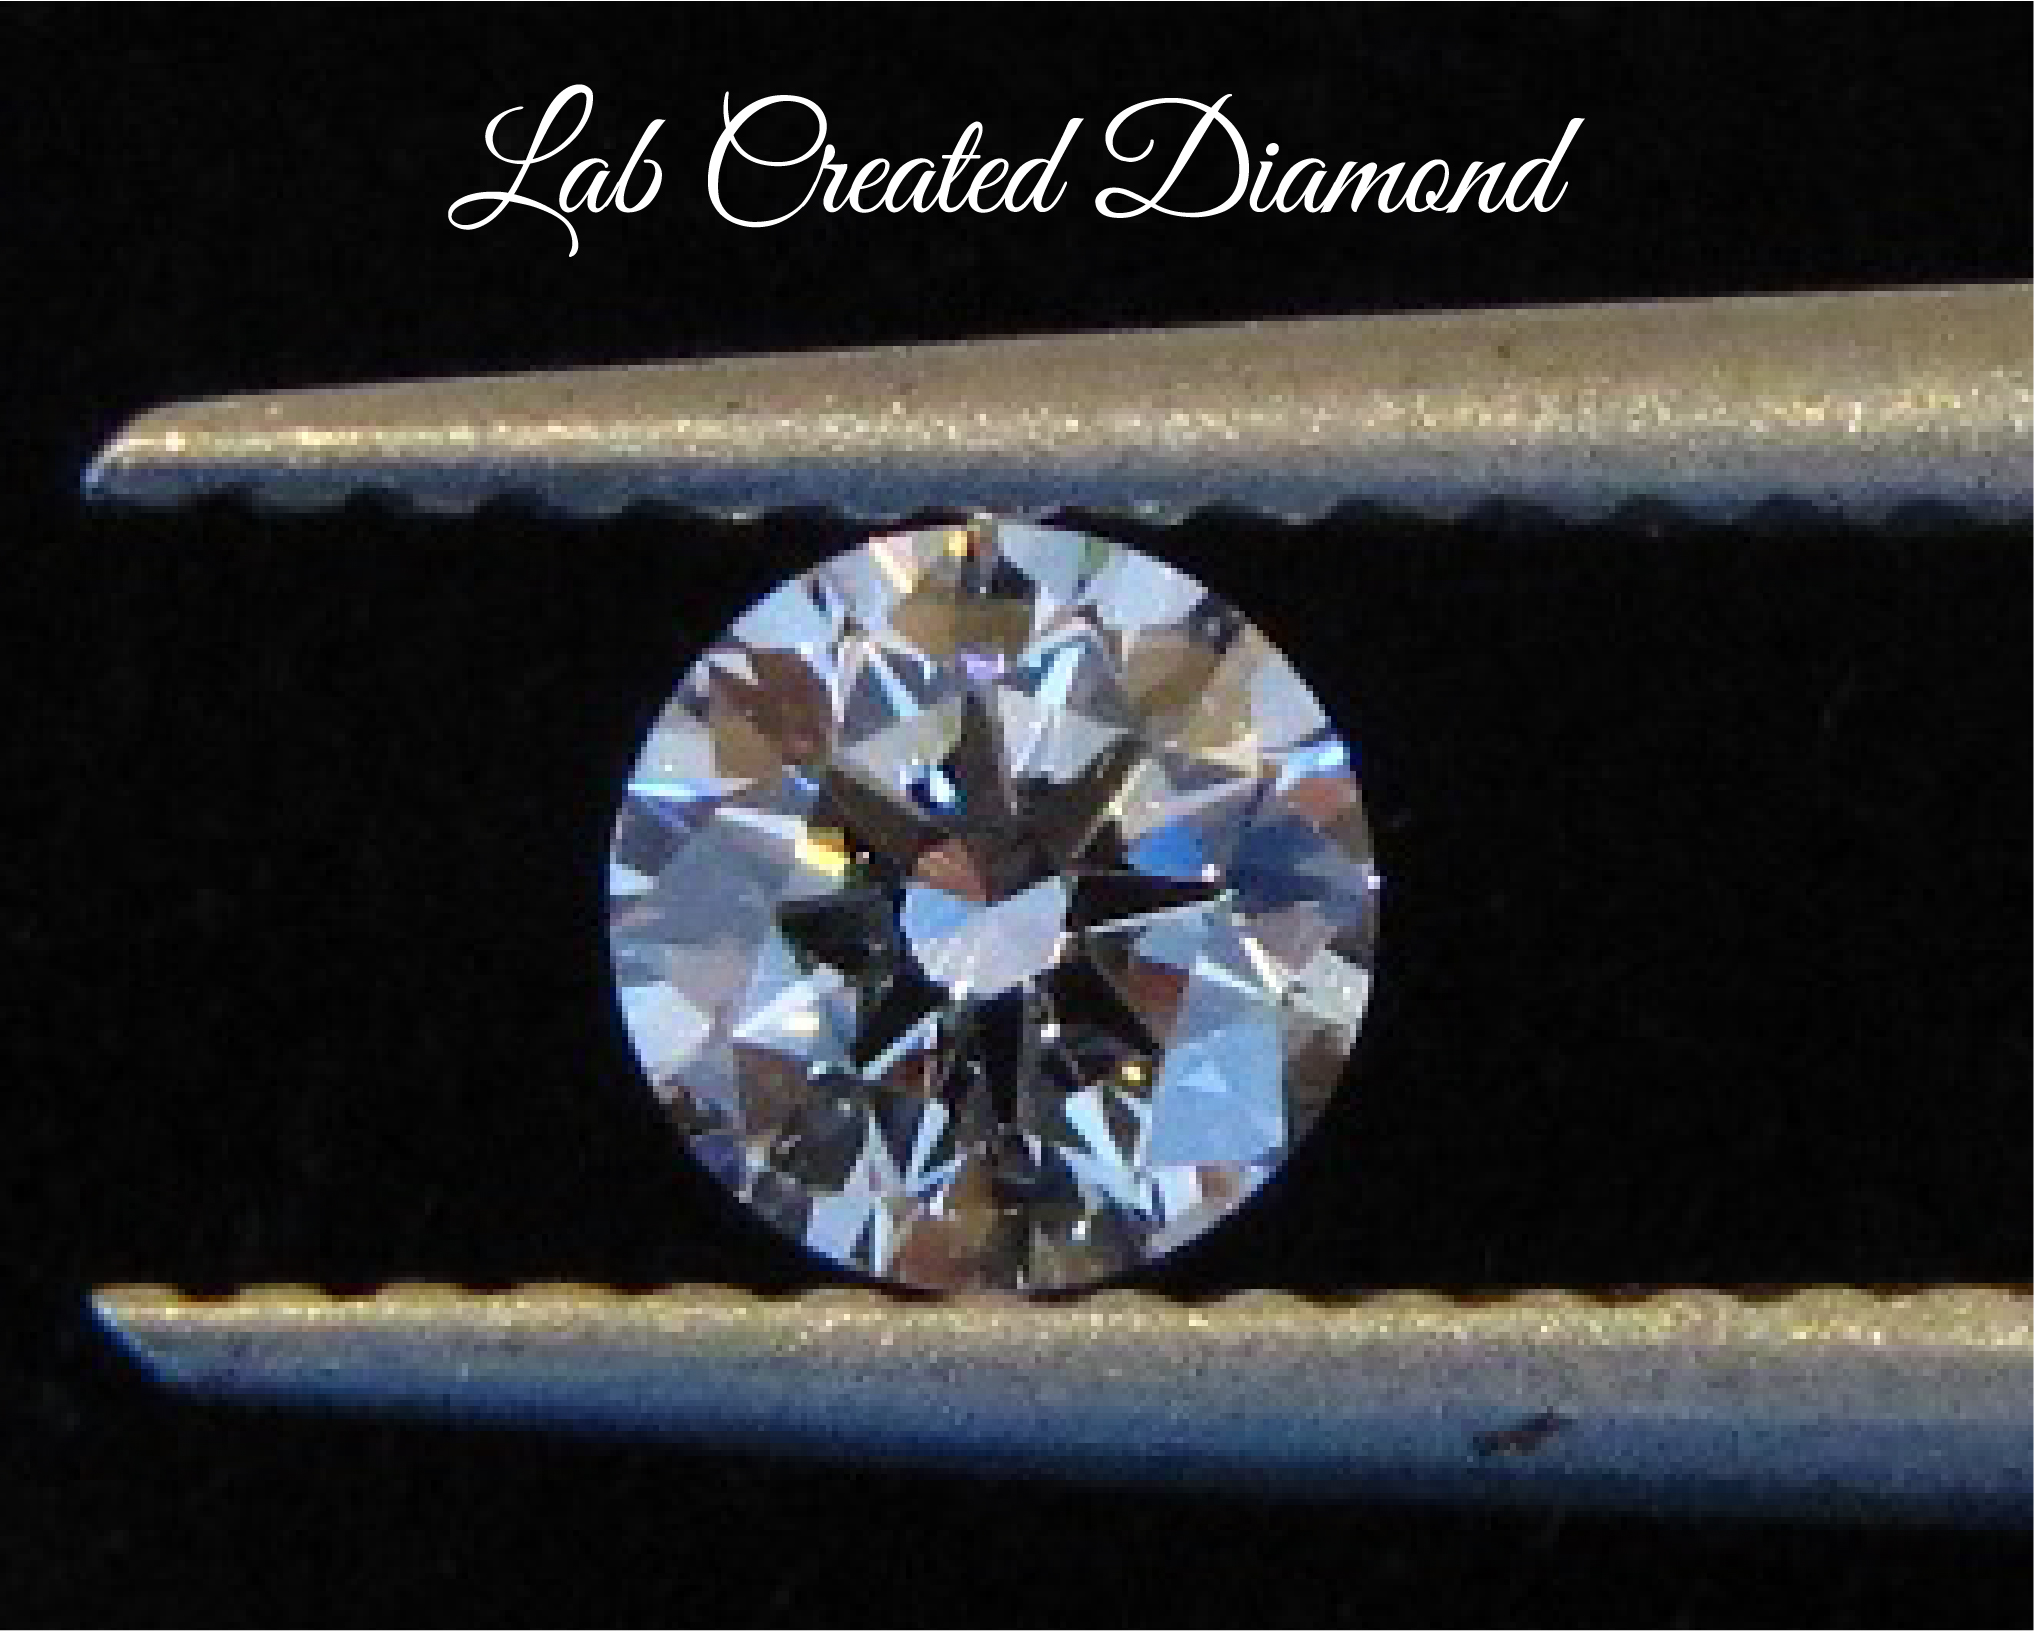 Lab Created Diamond Buying Tips